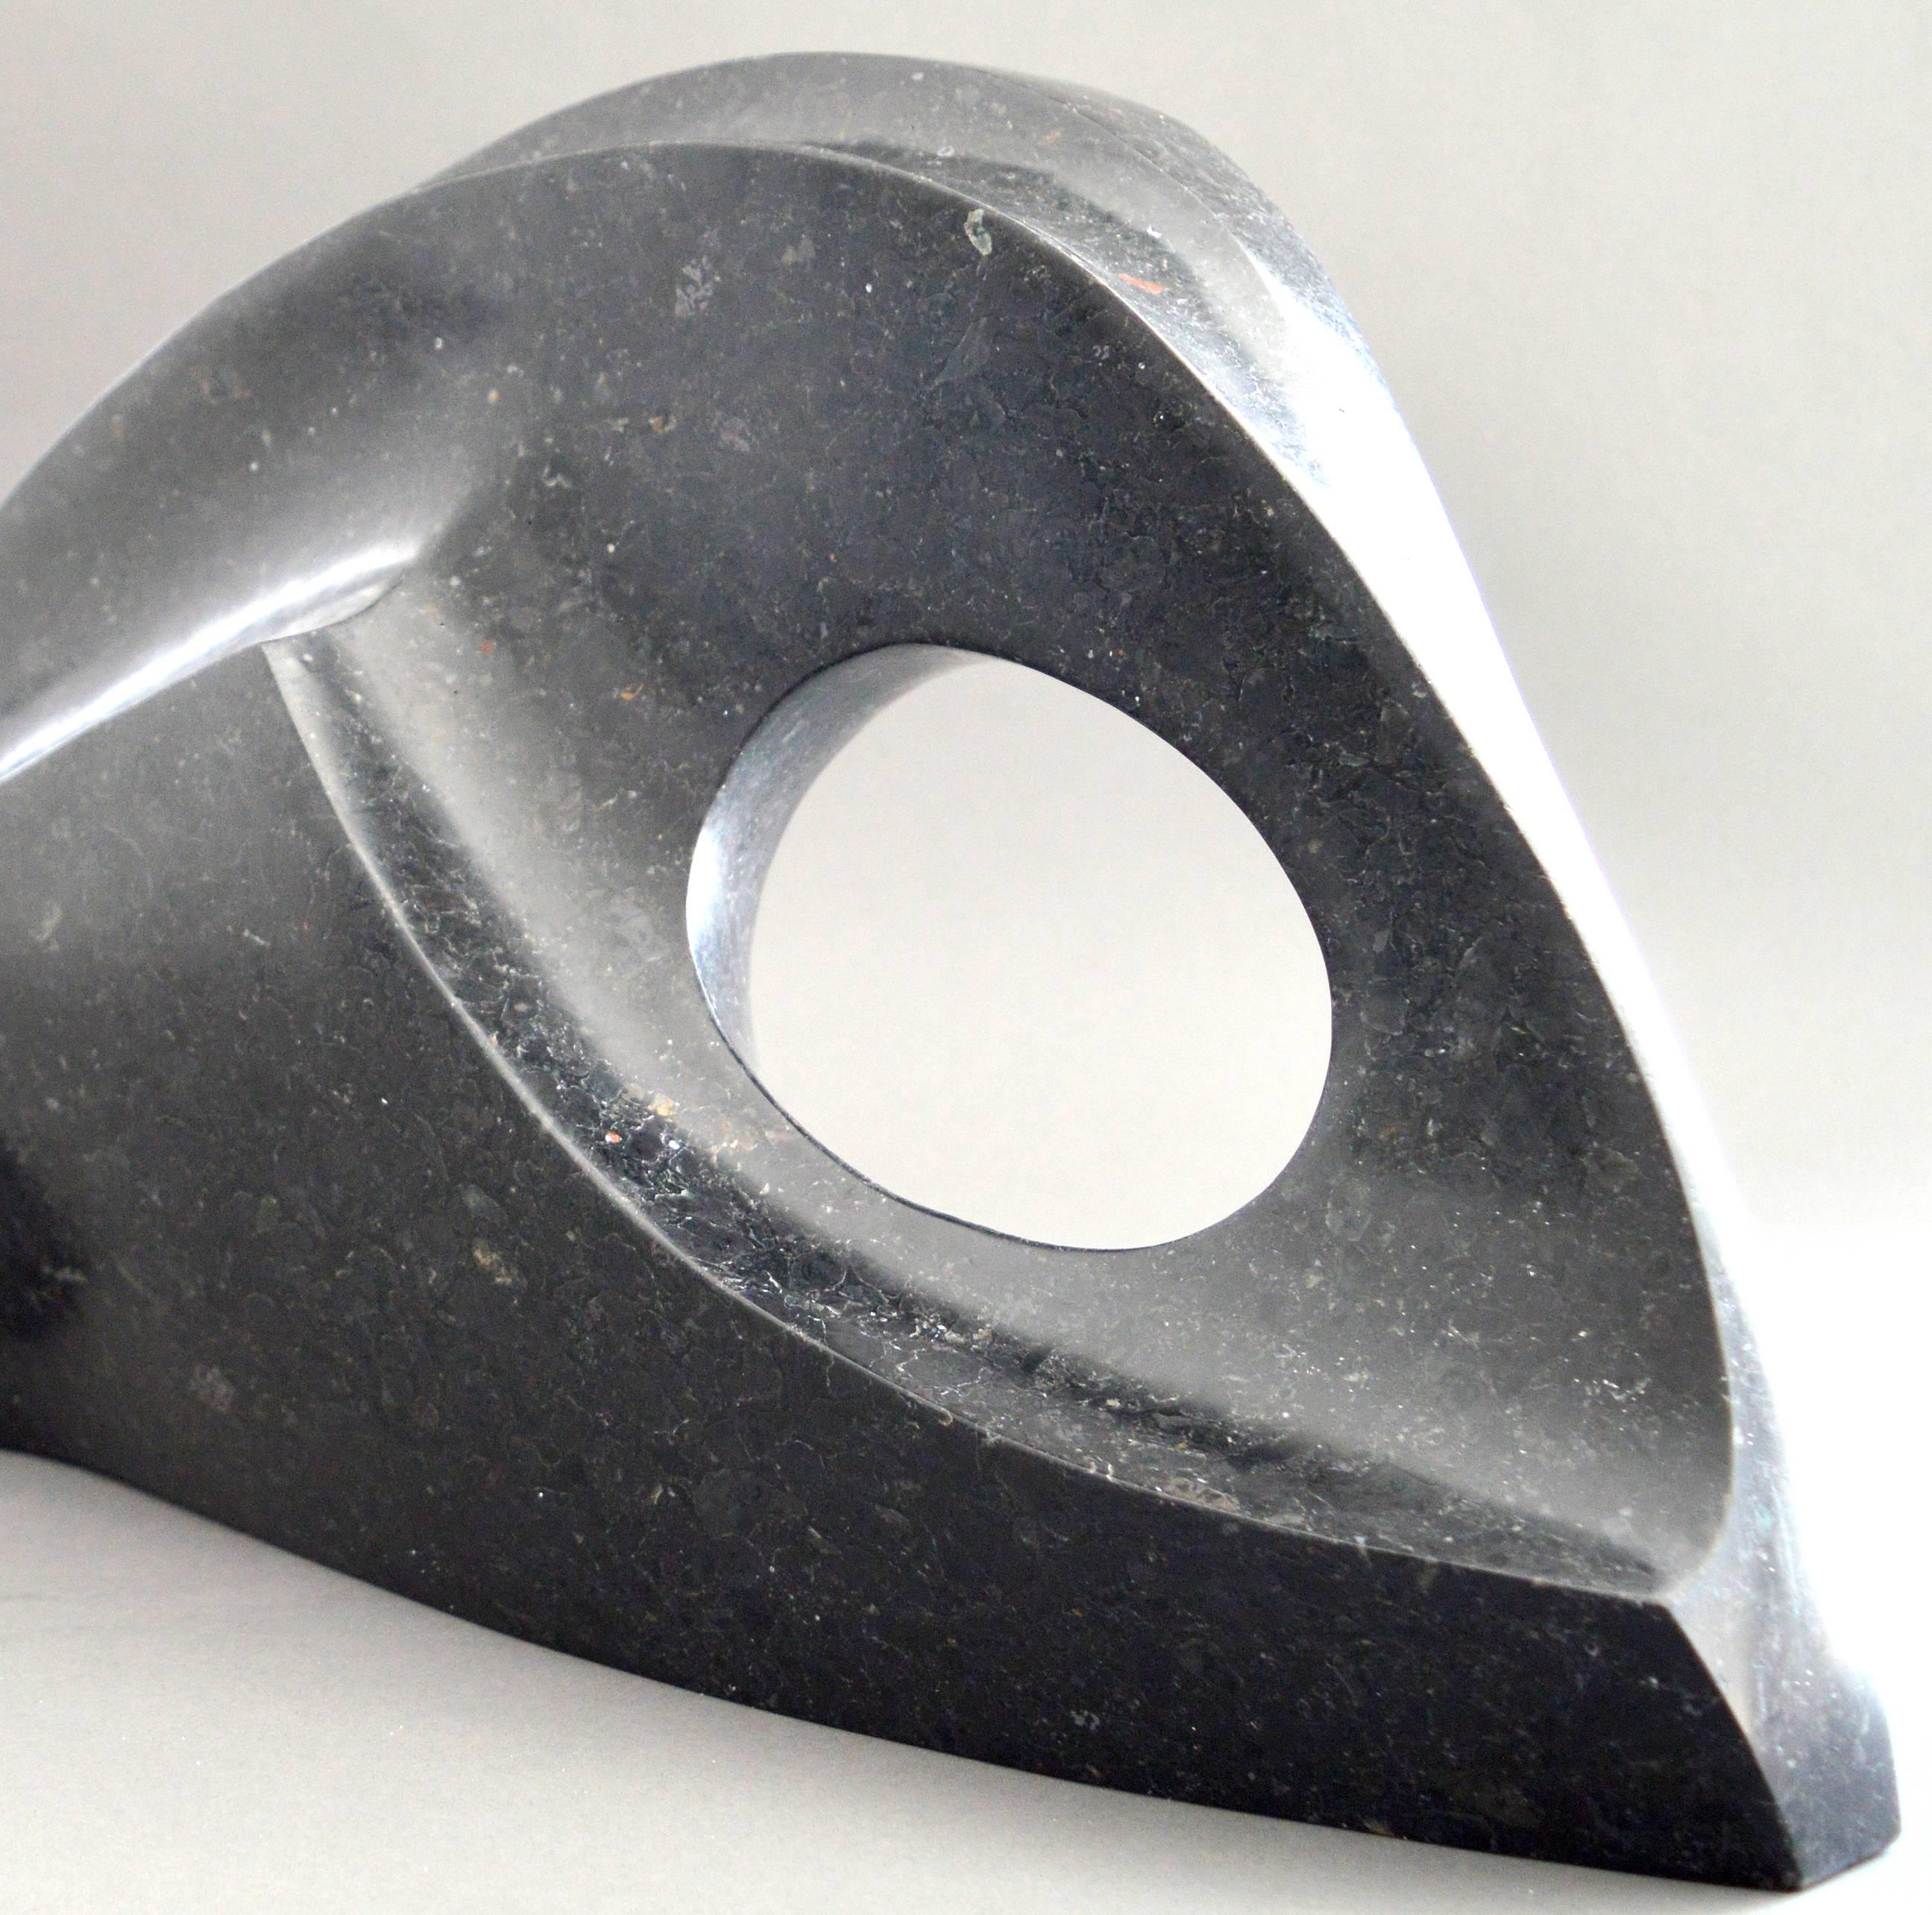 Celeste, Reclining Figure 3/50 - smooth, granite, figurative, tabletop sculpture - Contemporary Sculpture by Jeremy Guy